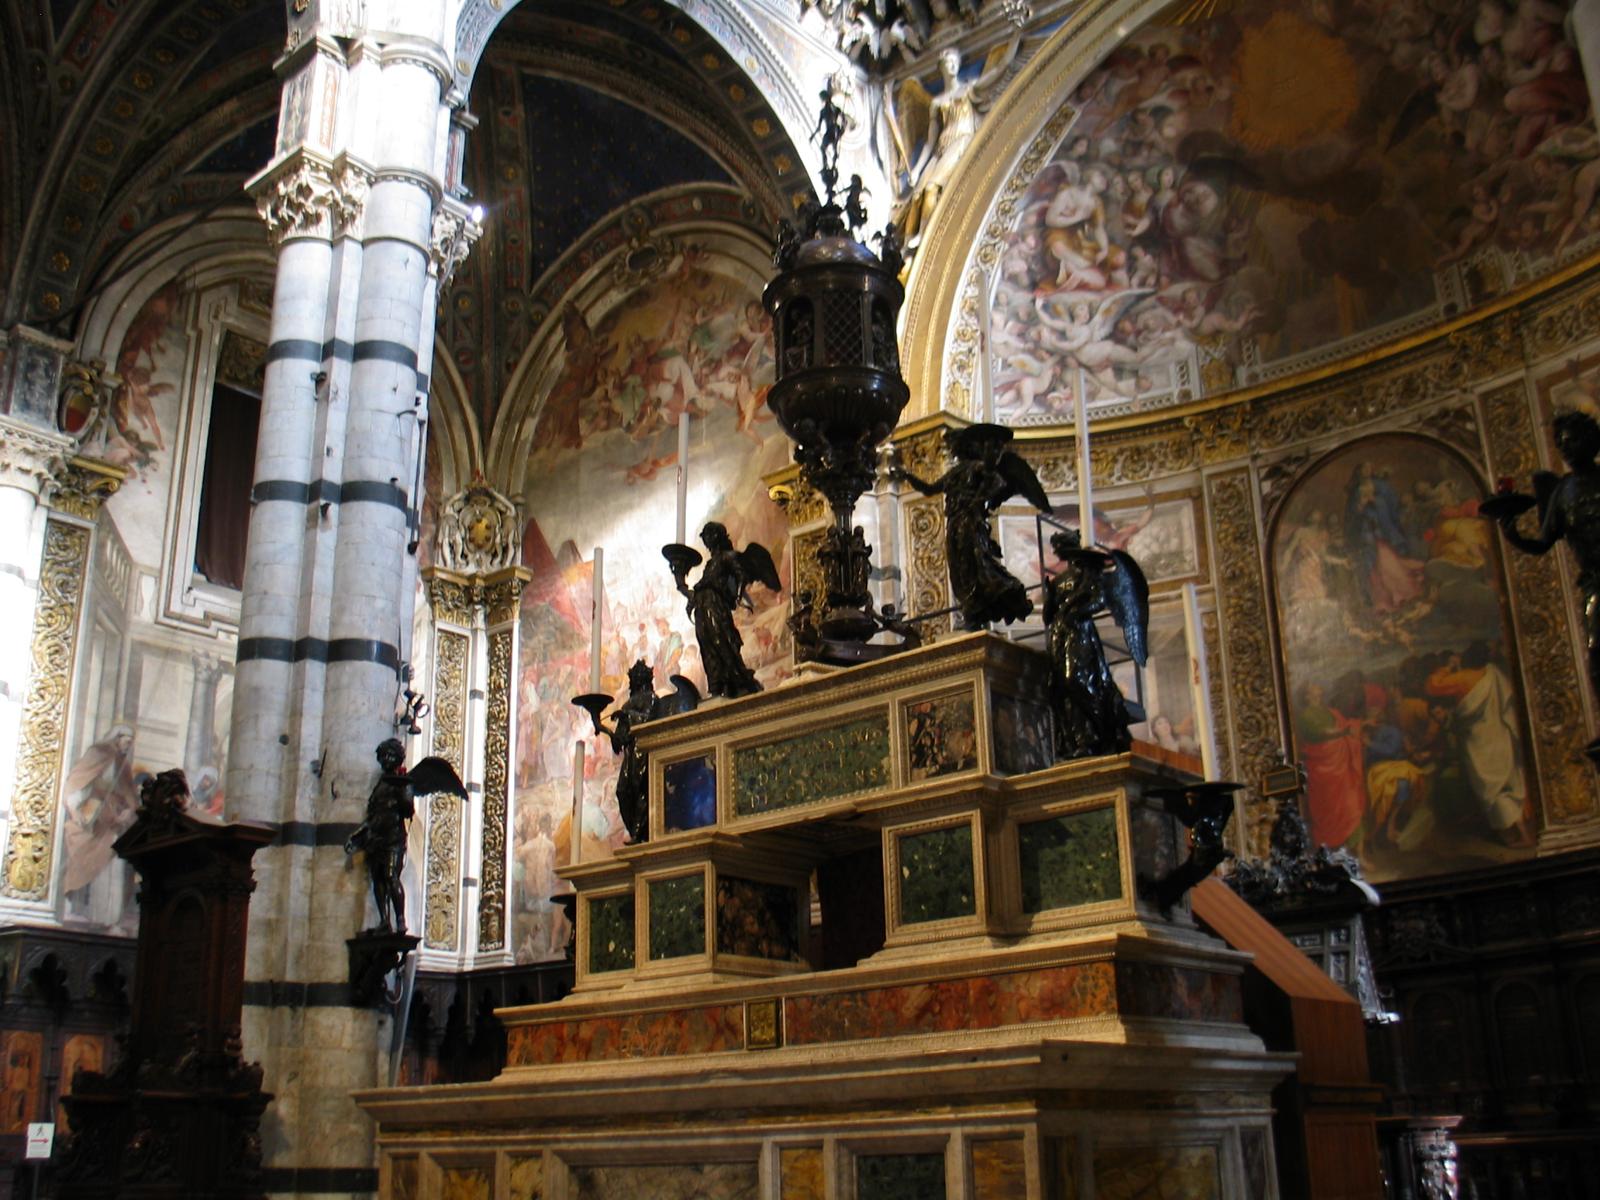 Neat statue in the Duomo